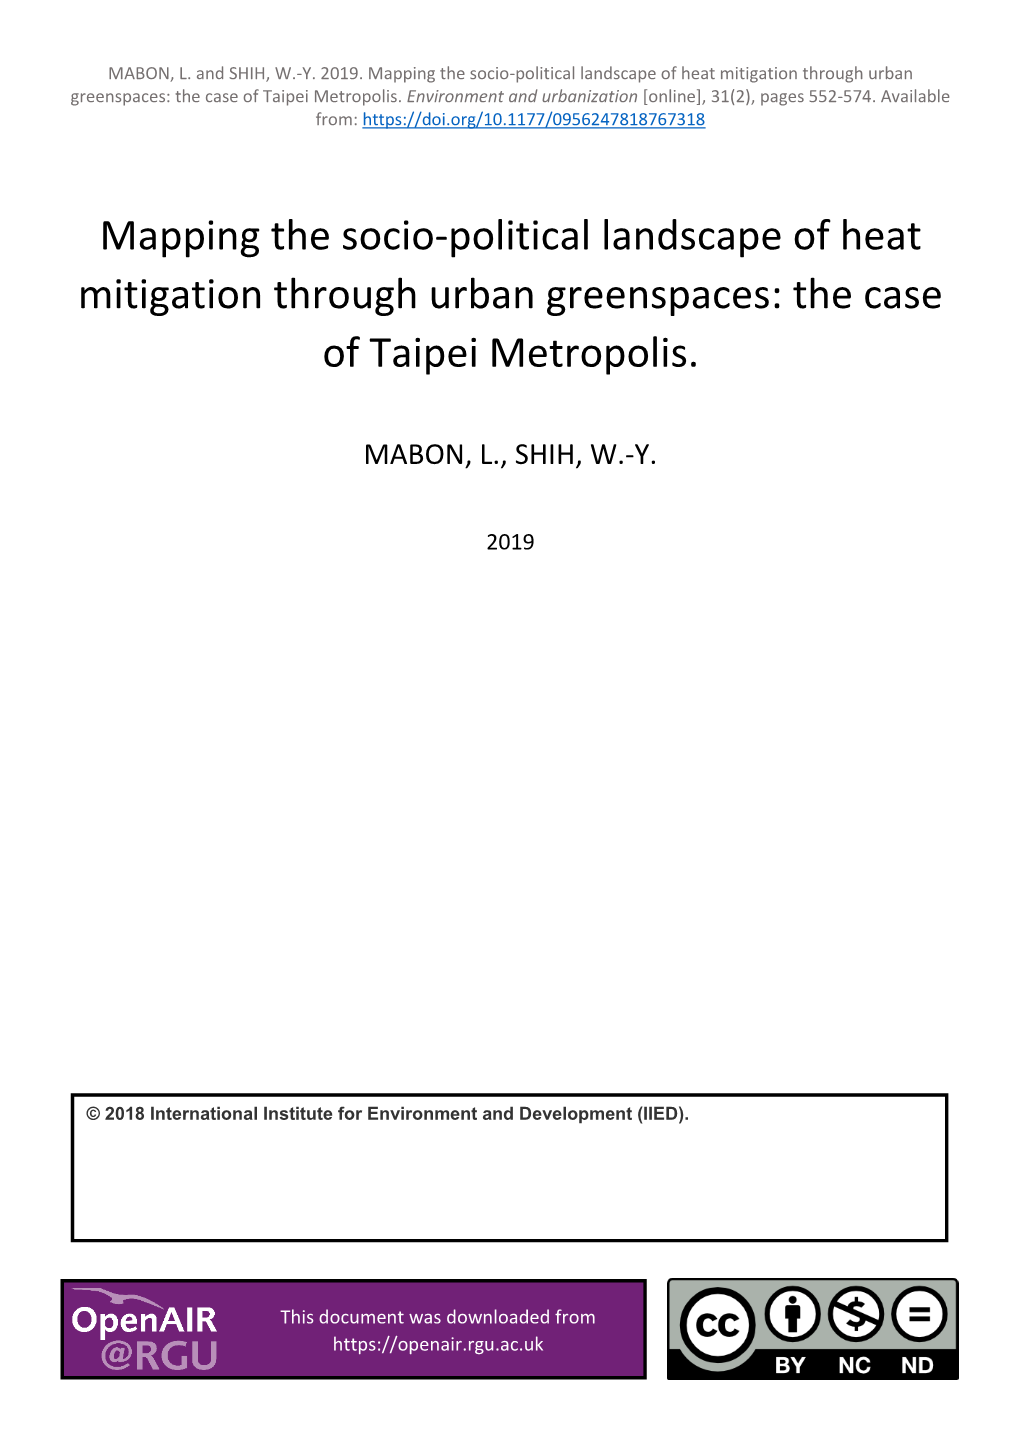 Mapping the Socio-Political Landscape of Heat Mitigation Through Urban Greenspaces: the Case of Taipei Metropolis